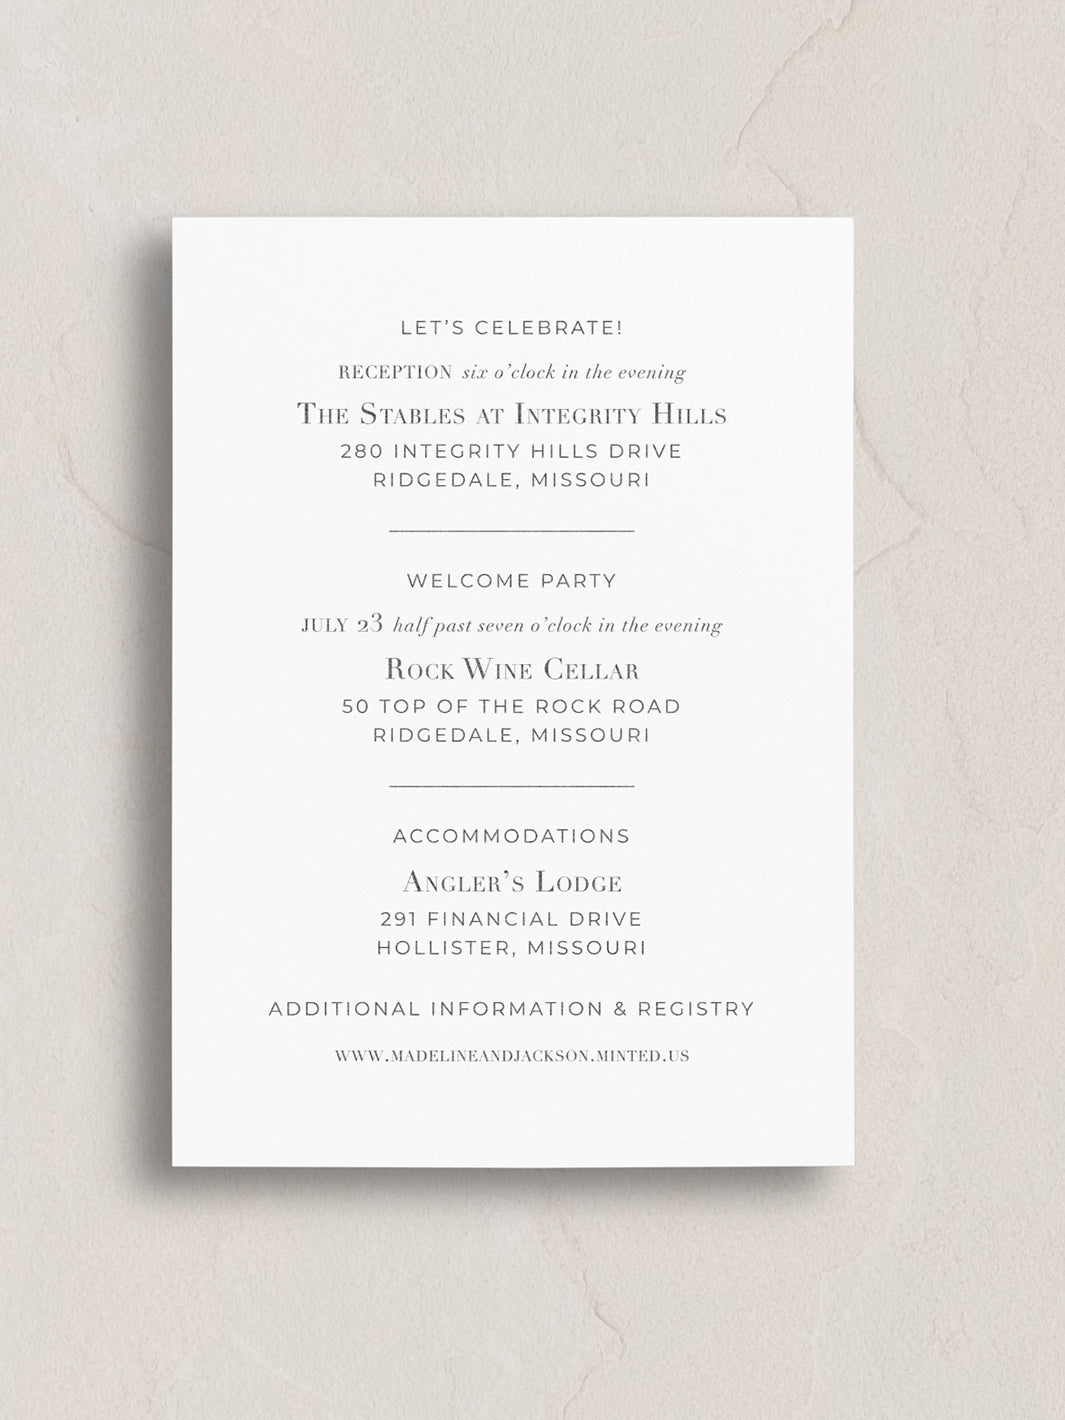 Kingston Semi-Custom Wedding Invitation Suite from Leighwood Design Studio